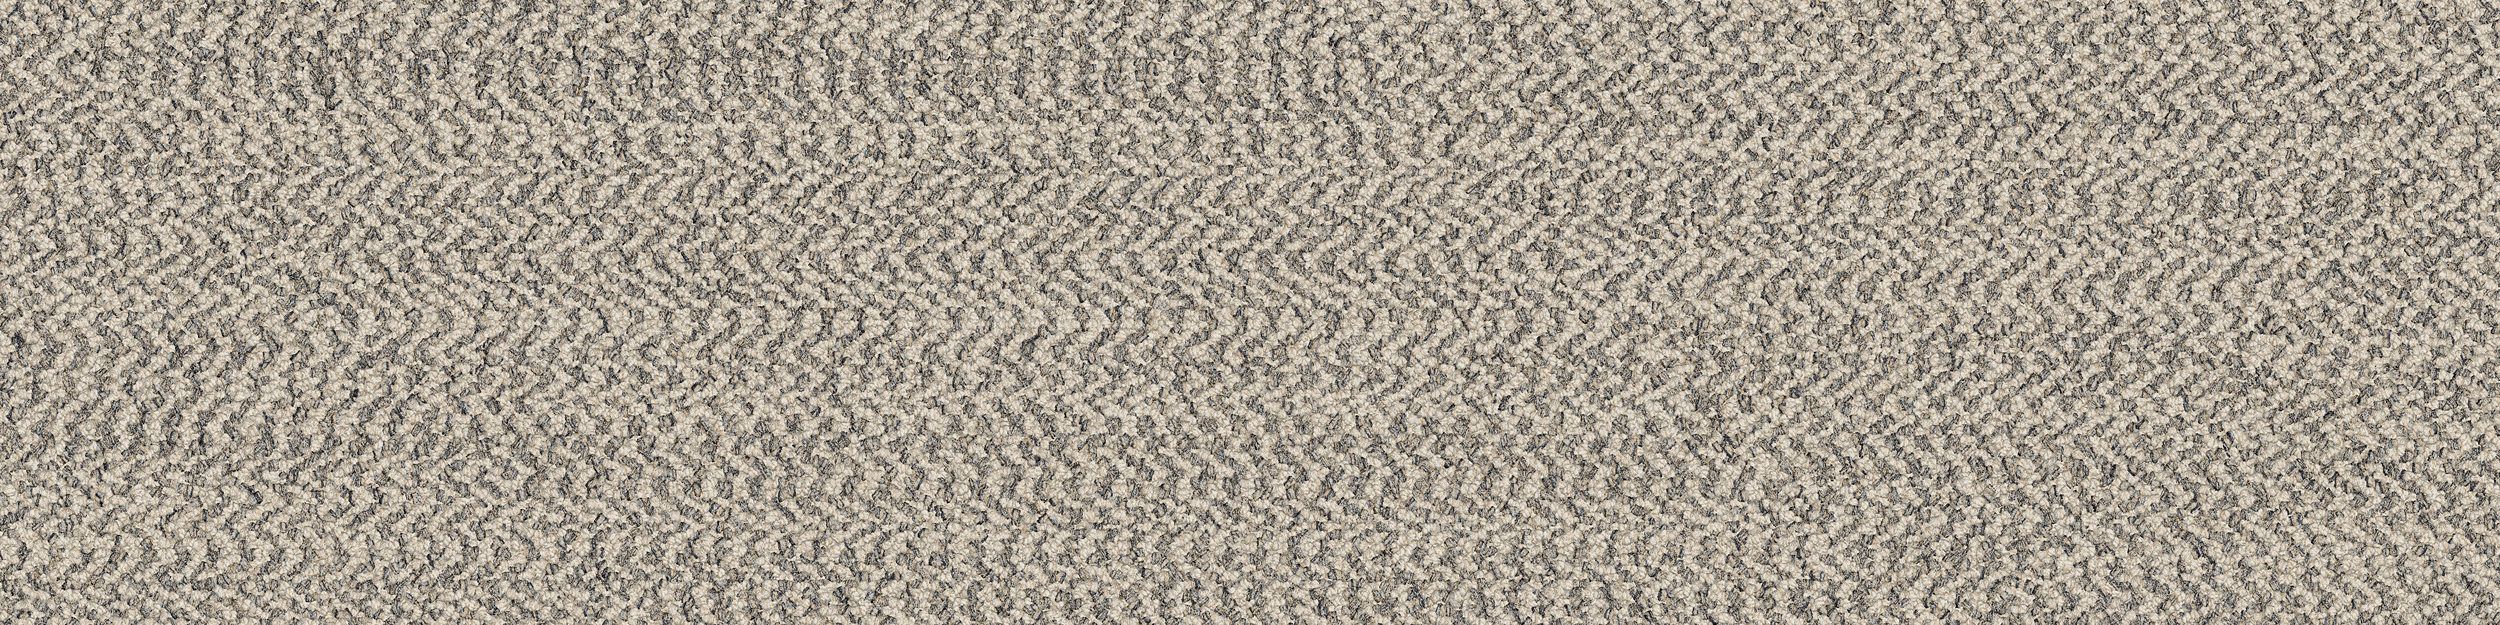 Third Space 307 Carpet Tile in Shell imagen número 2